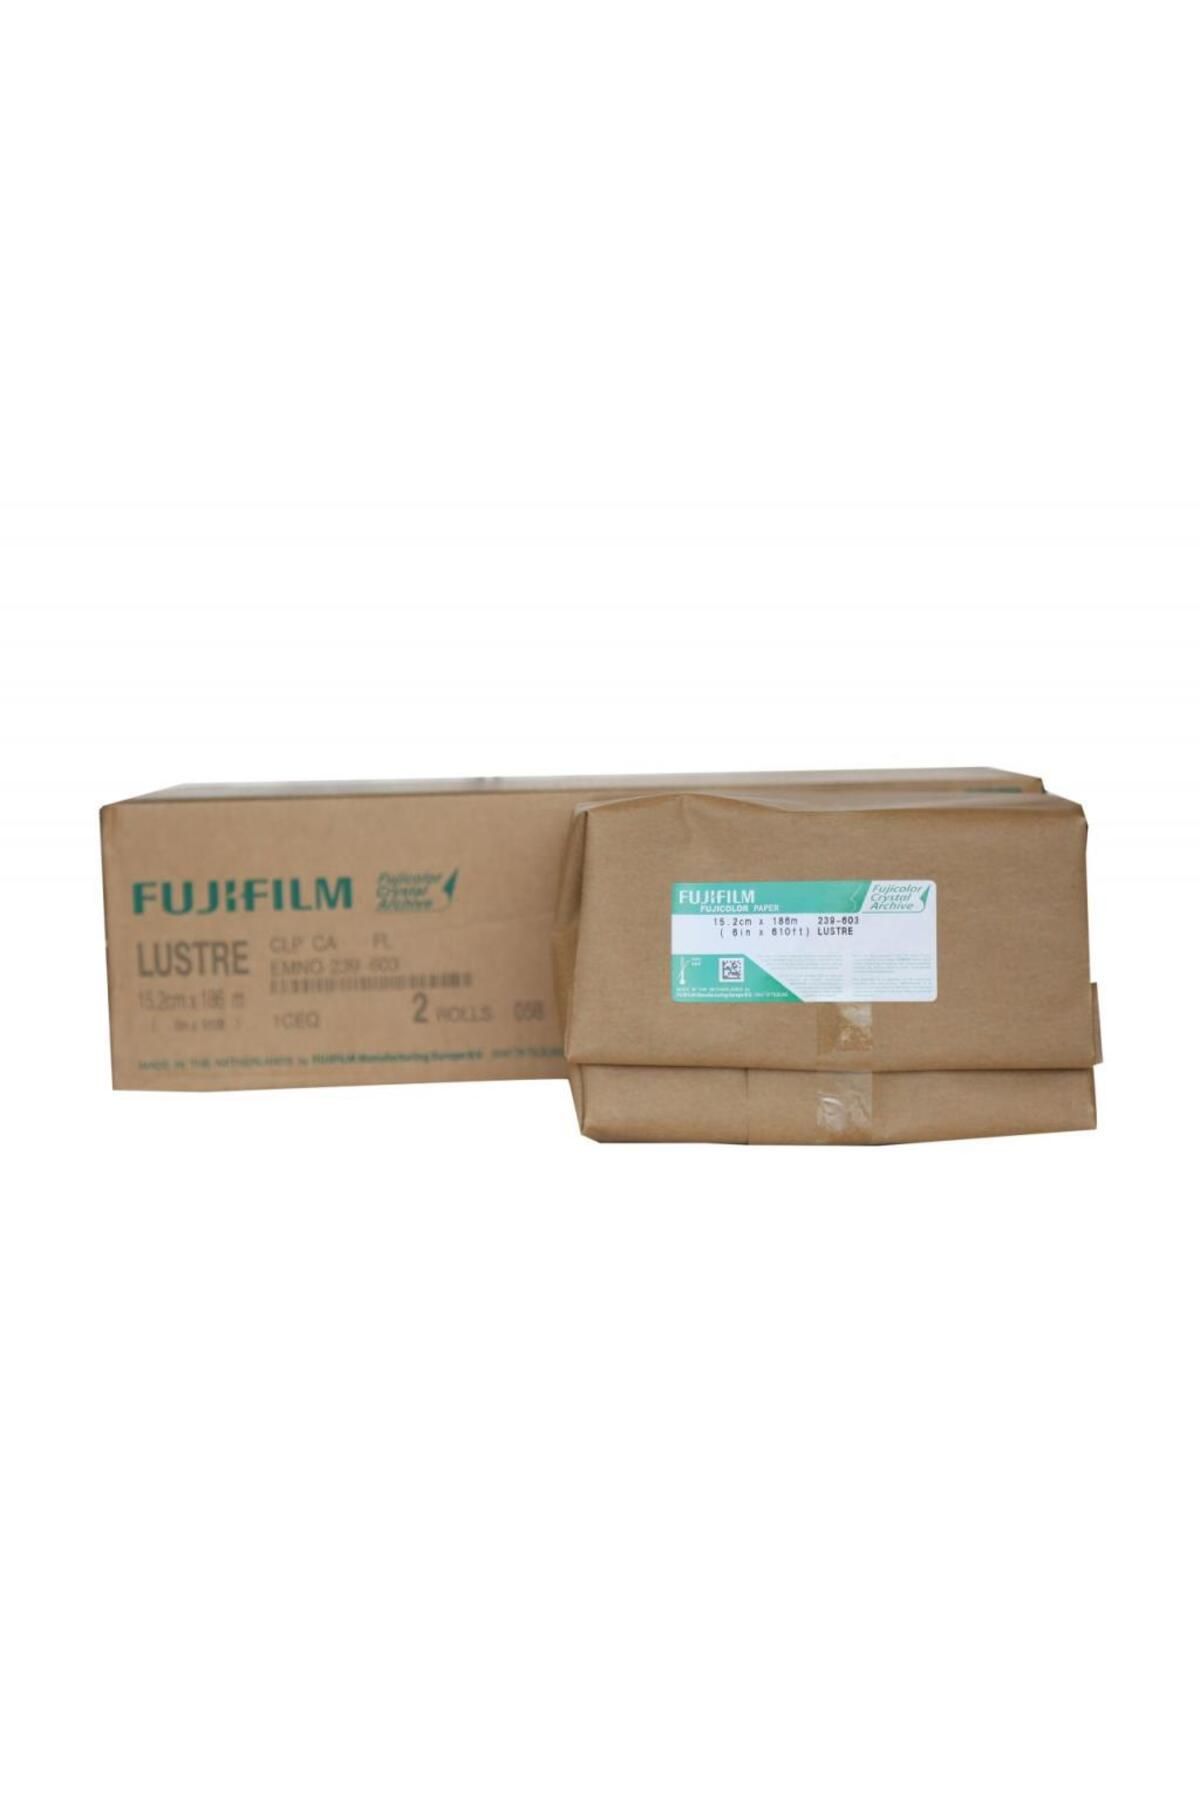 Fujifilm FUJİ CA 15.2x186m Fotoğraf Kağıtları - Glossy (Parlak)